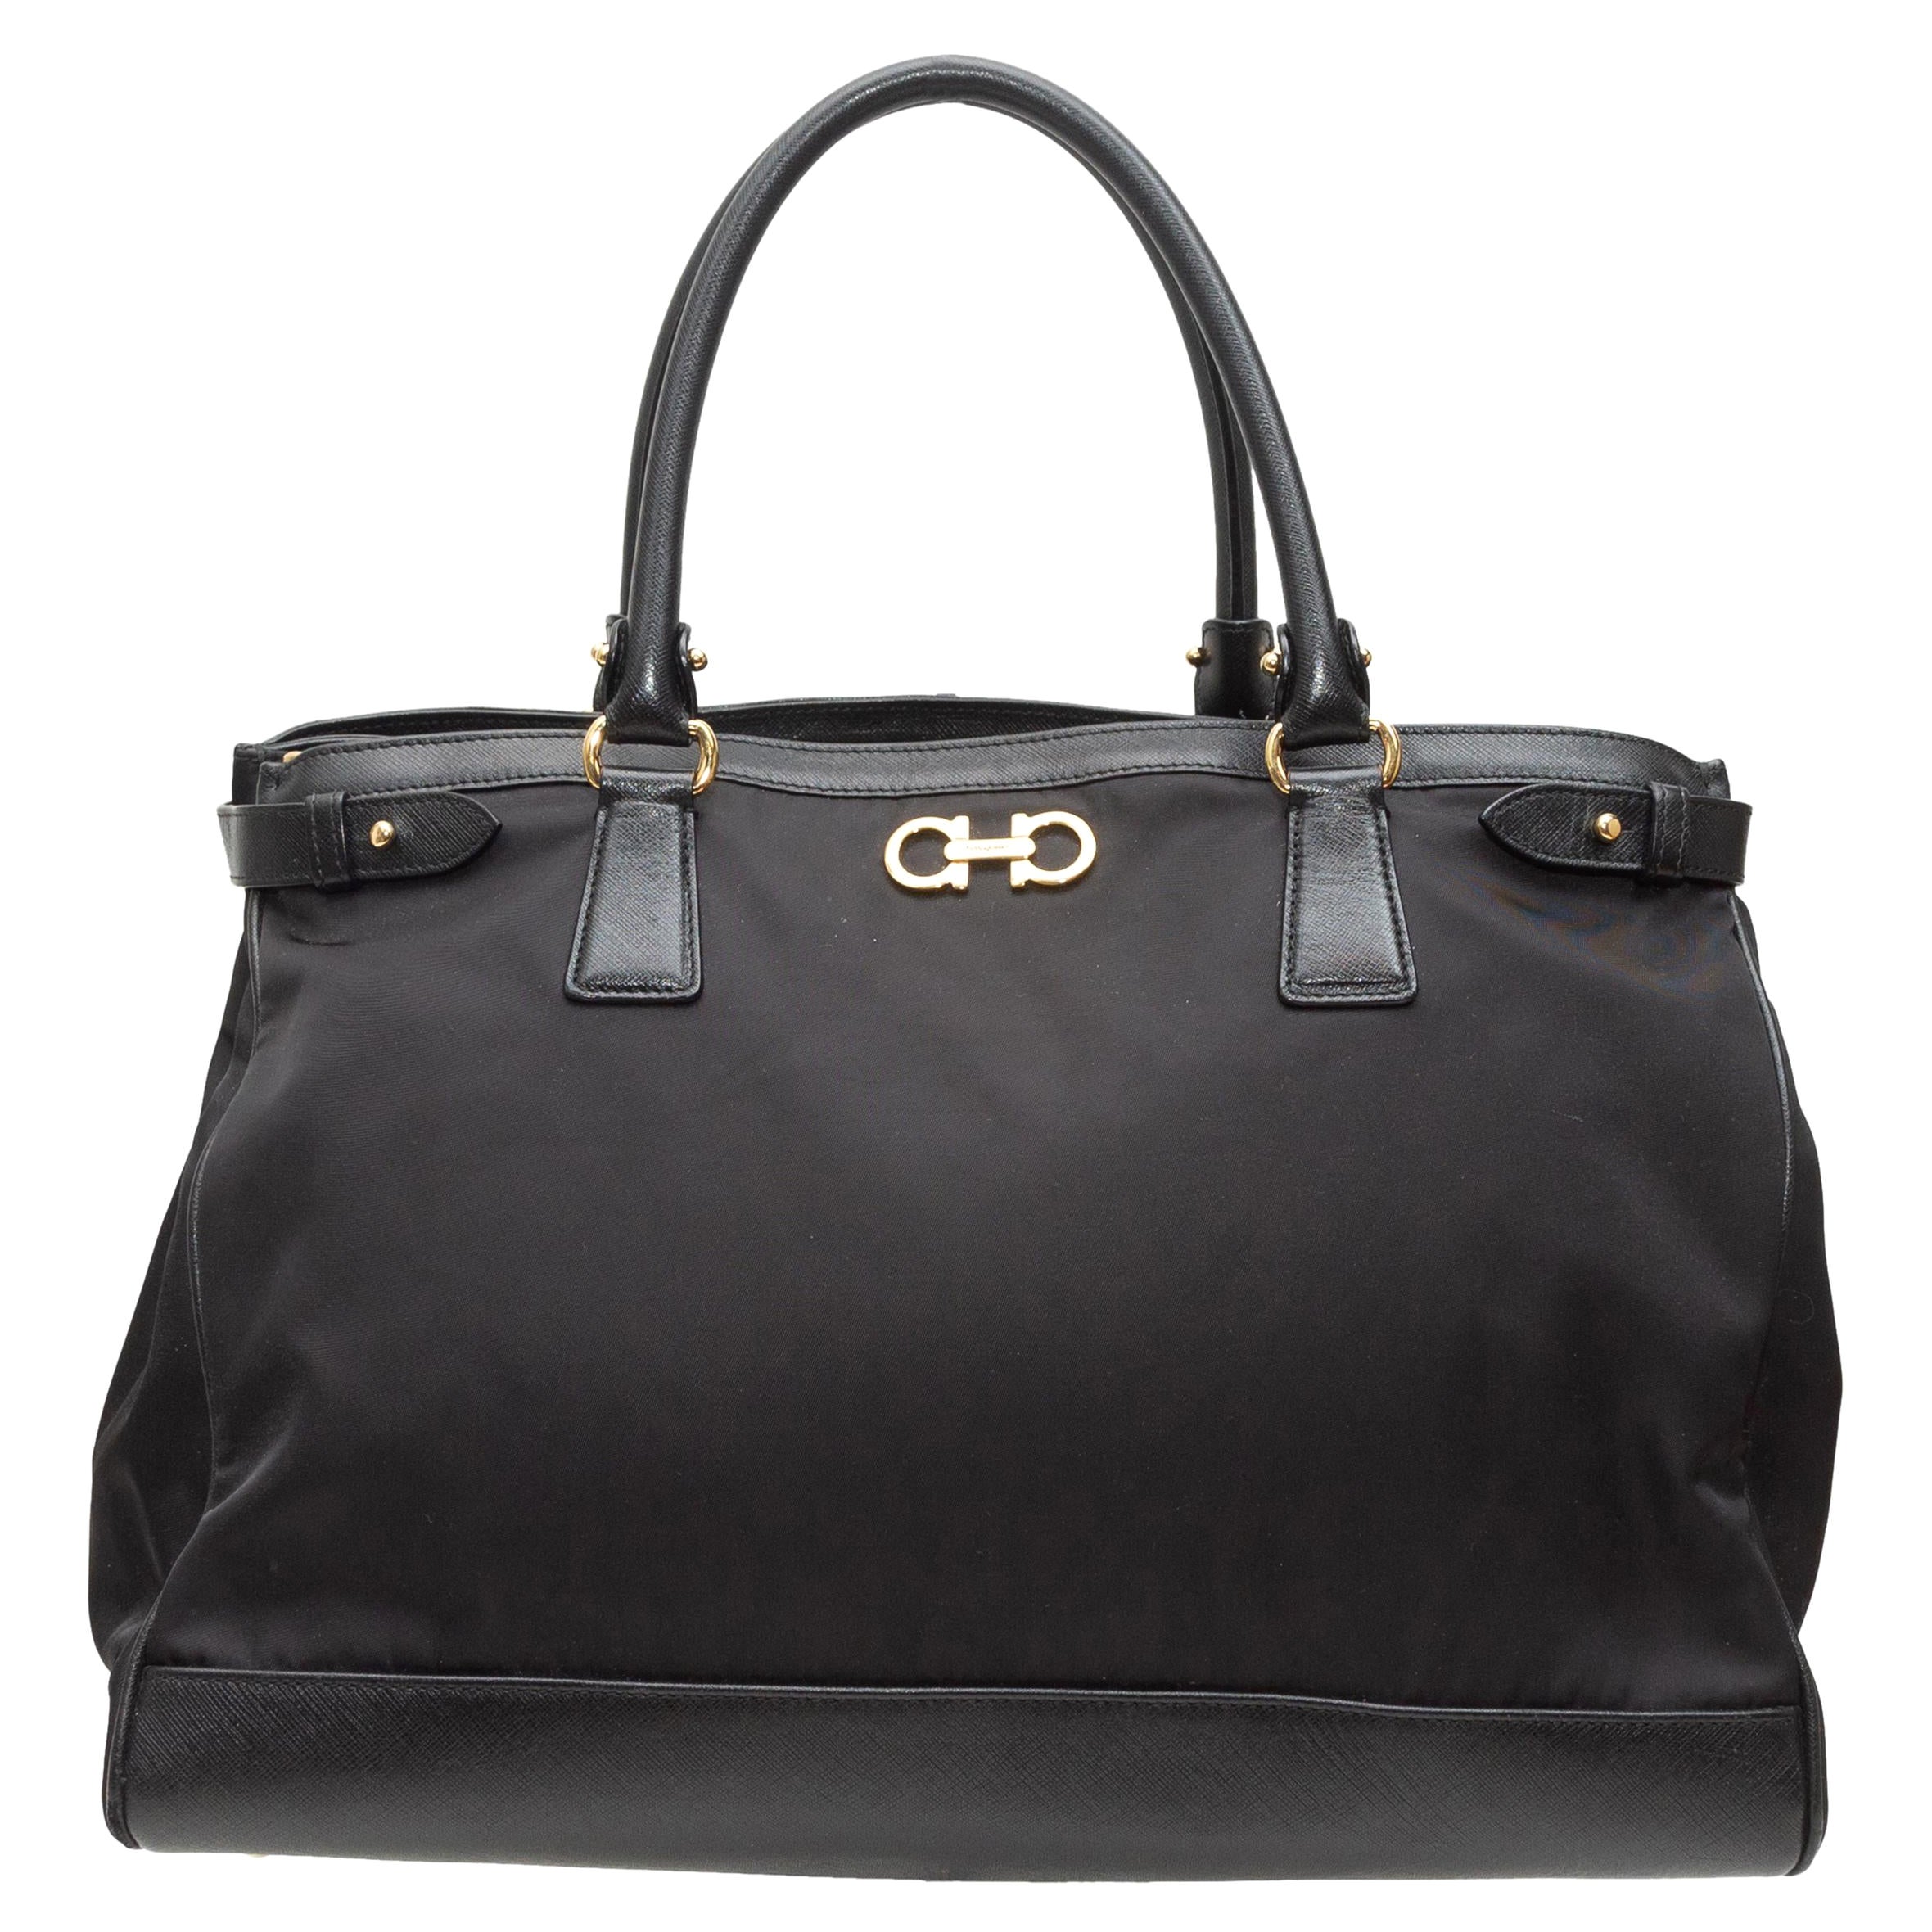 Salvatore Ferragamo Black Nylon & Leather Handbag